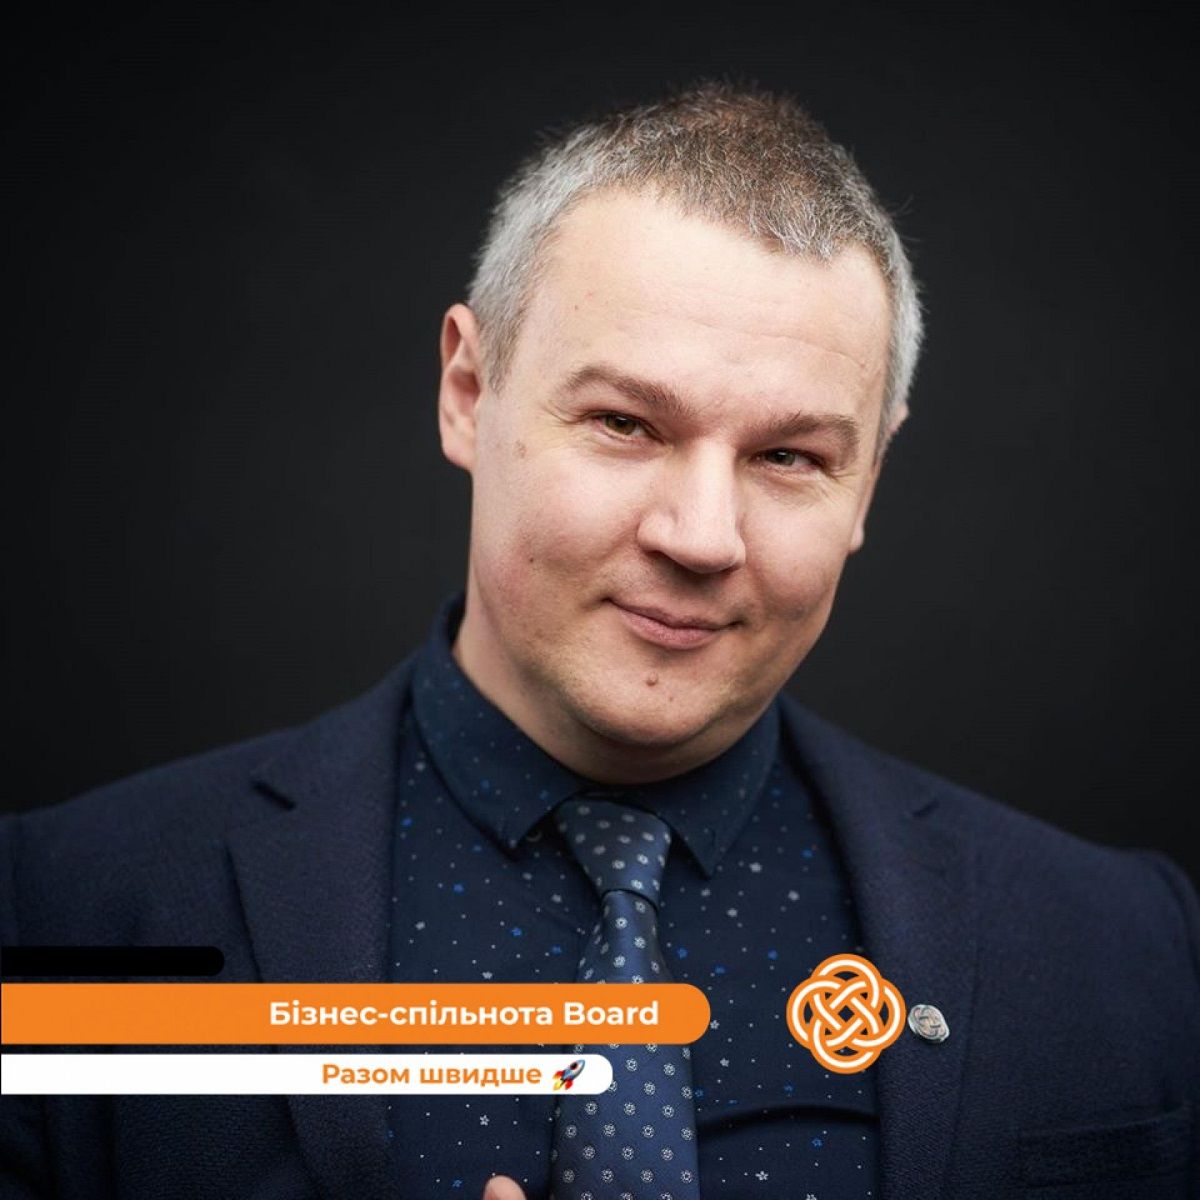 Маркетолог, SMM специалист Евгений Василенко